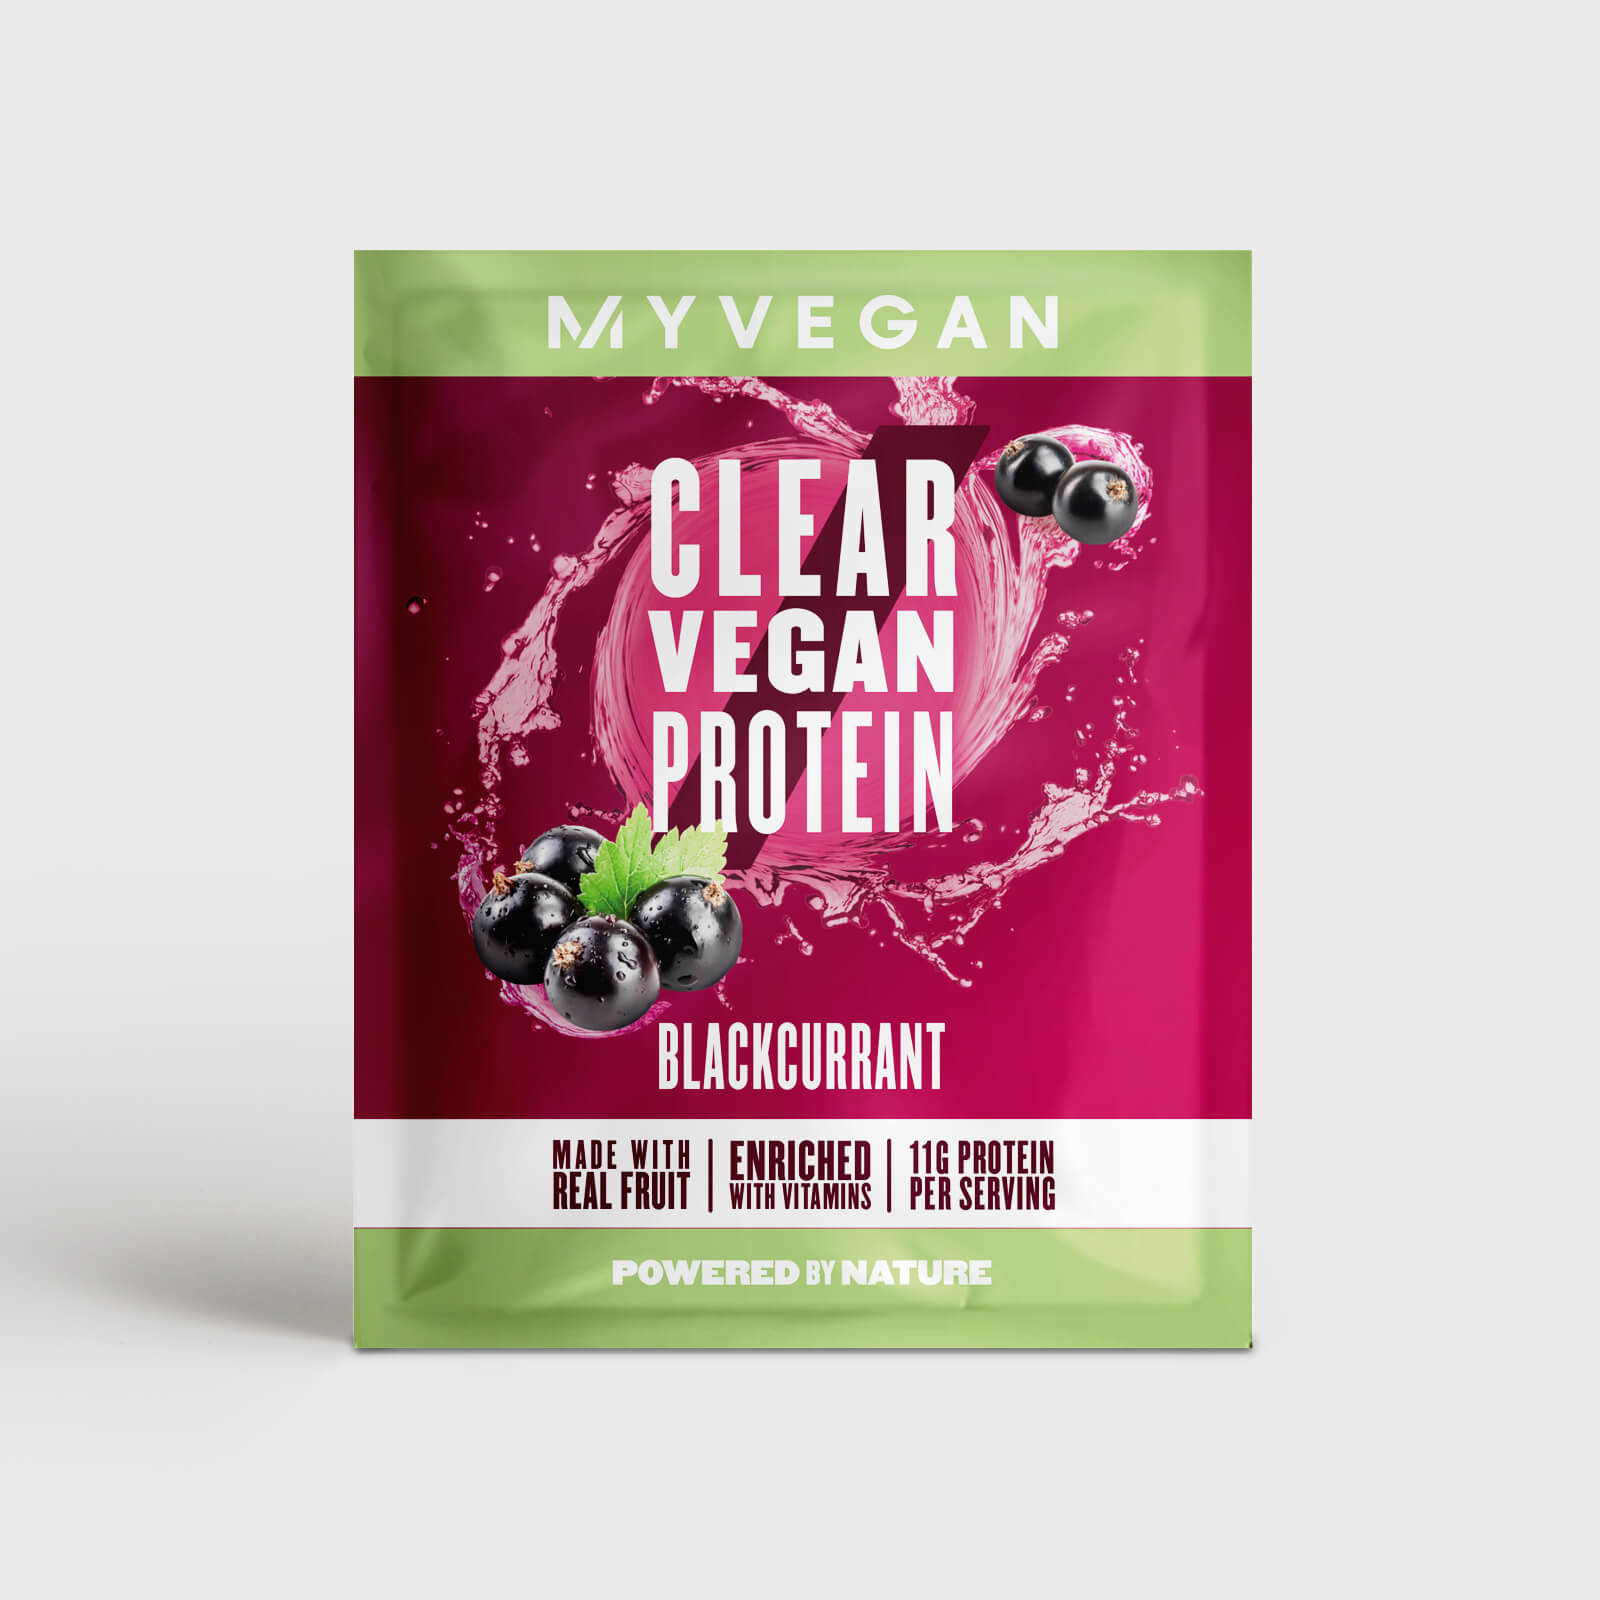 Myvegan Clear Vegan Protein, 16g (Sample) - 16g - Ribes nero